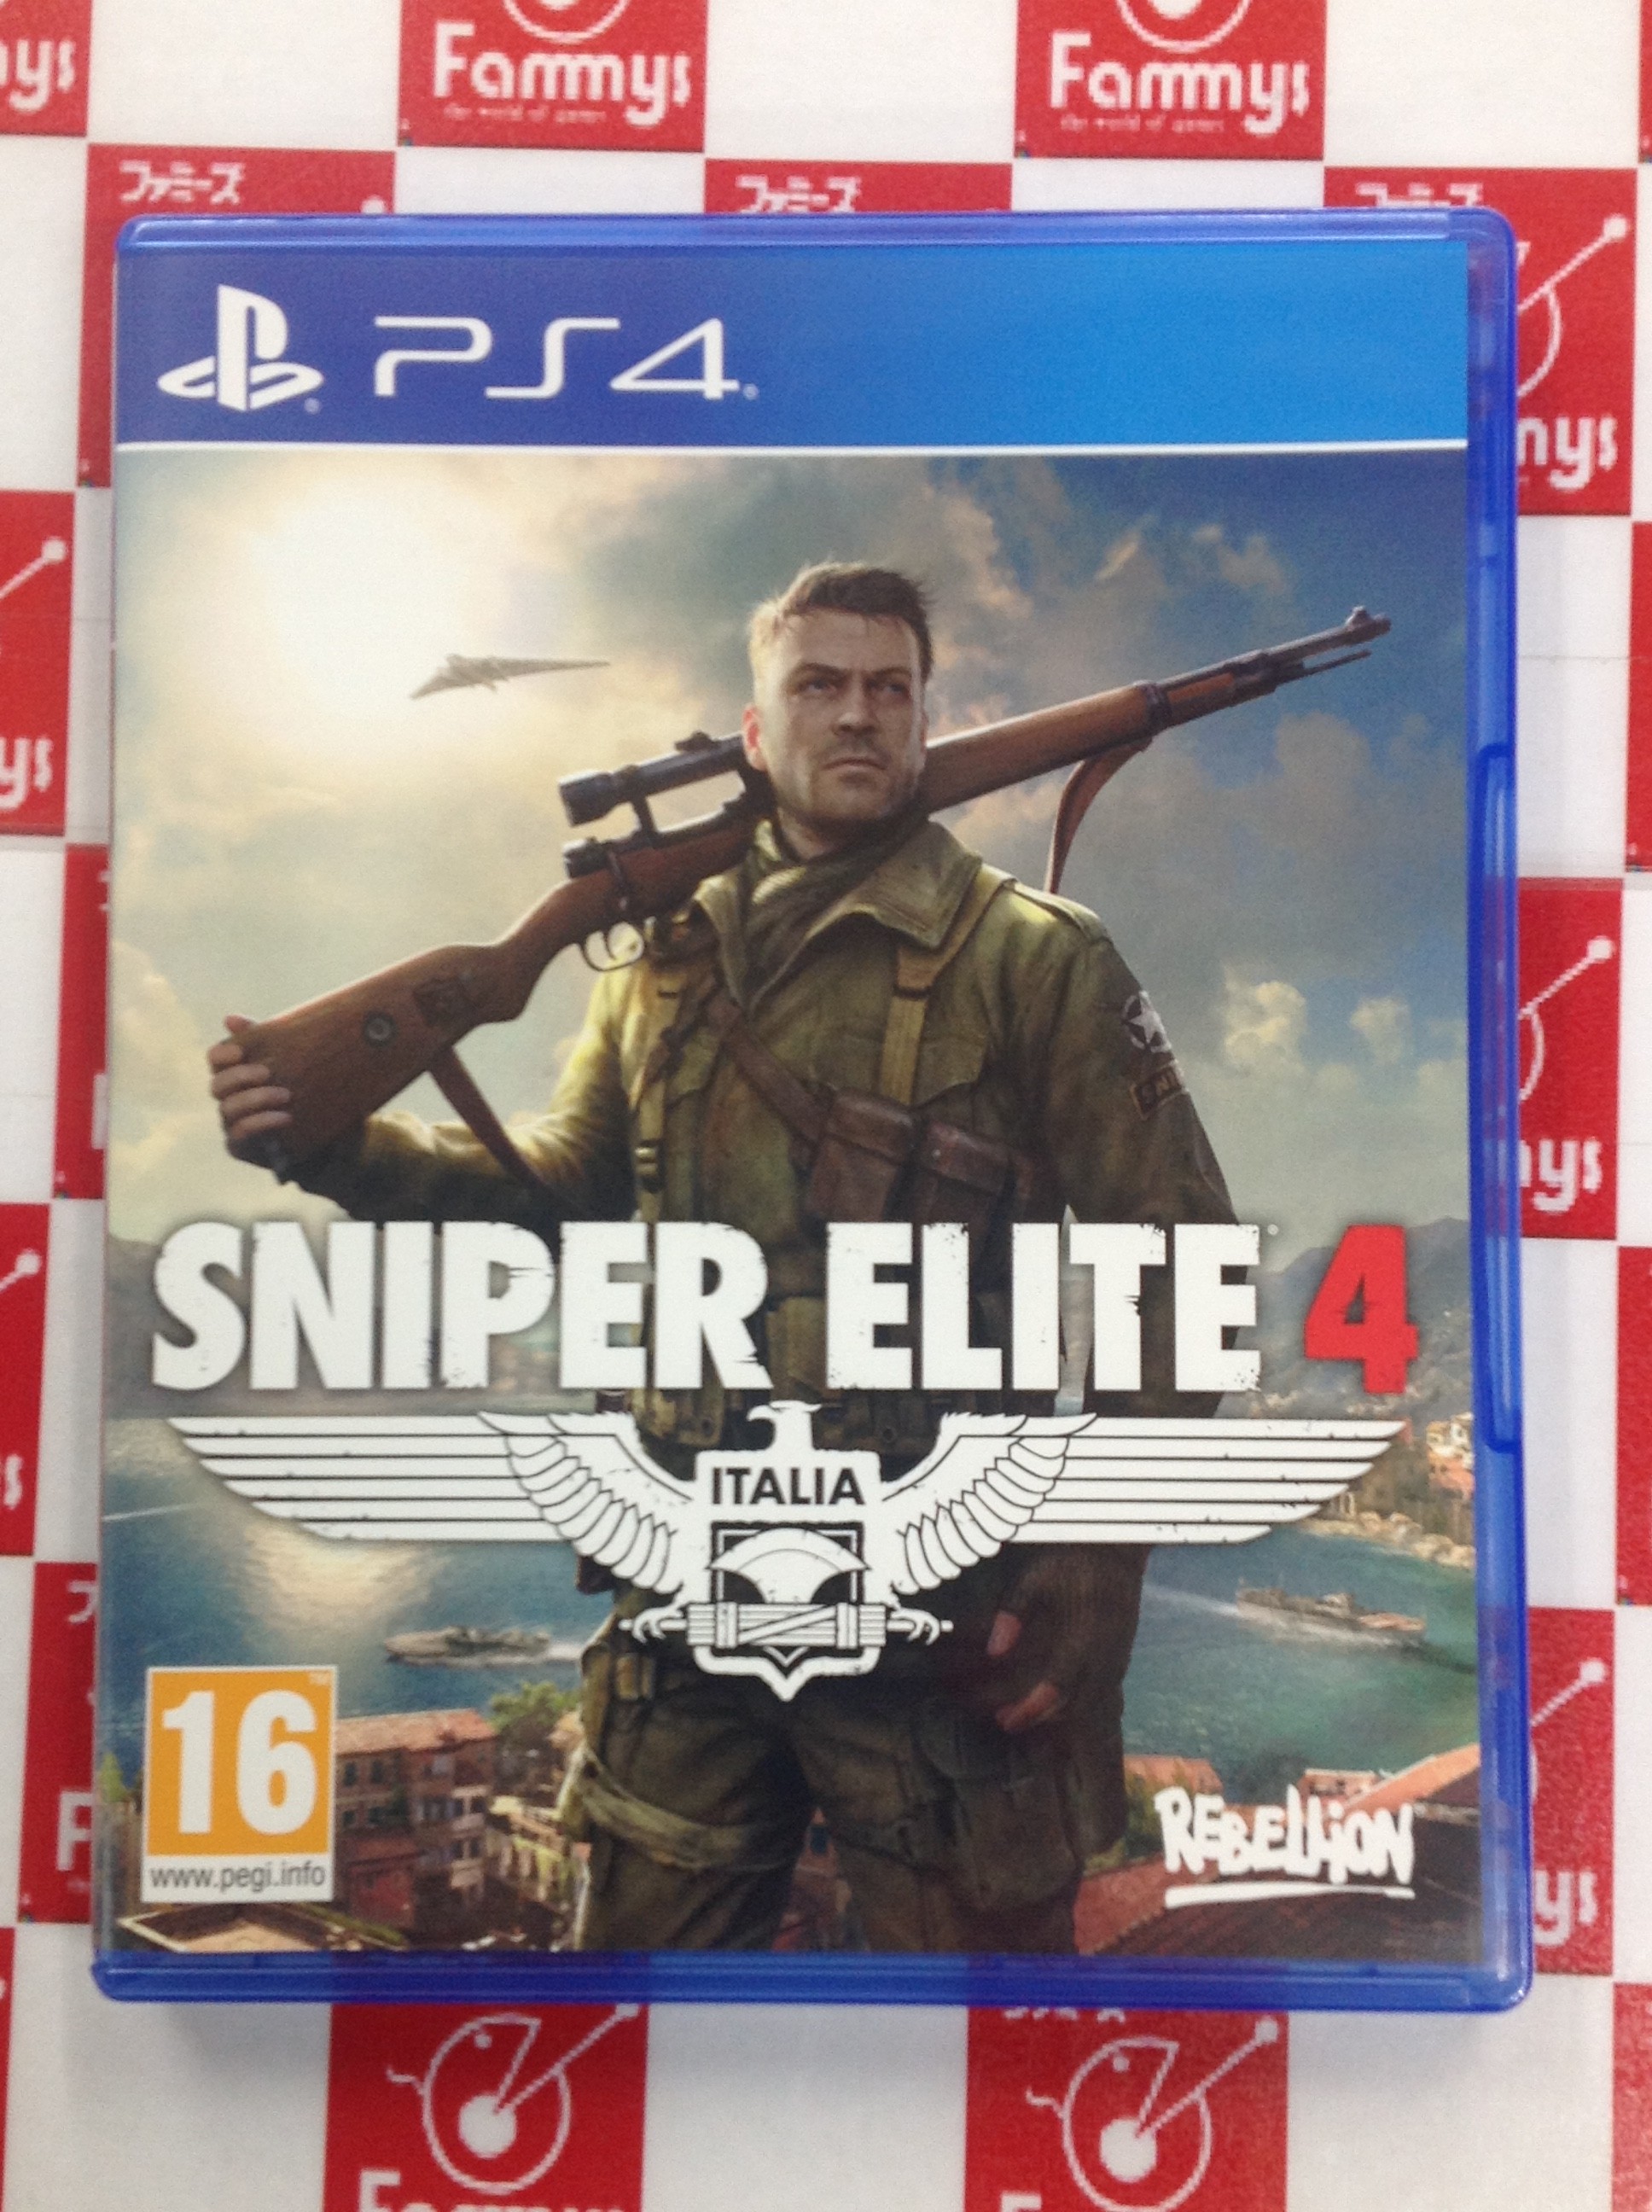 Ps4 北米版 Sniper Elite 4 買い取りました ゲーム フィギュア トレカの買取 お宝創庫 ファミーズ 共和店